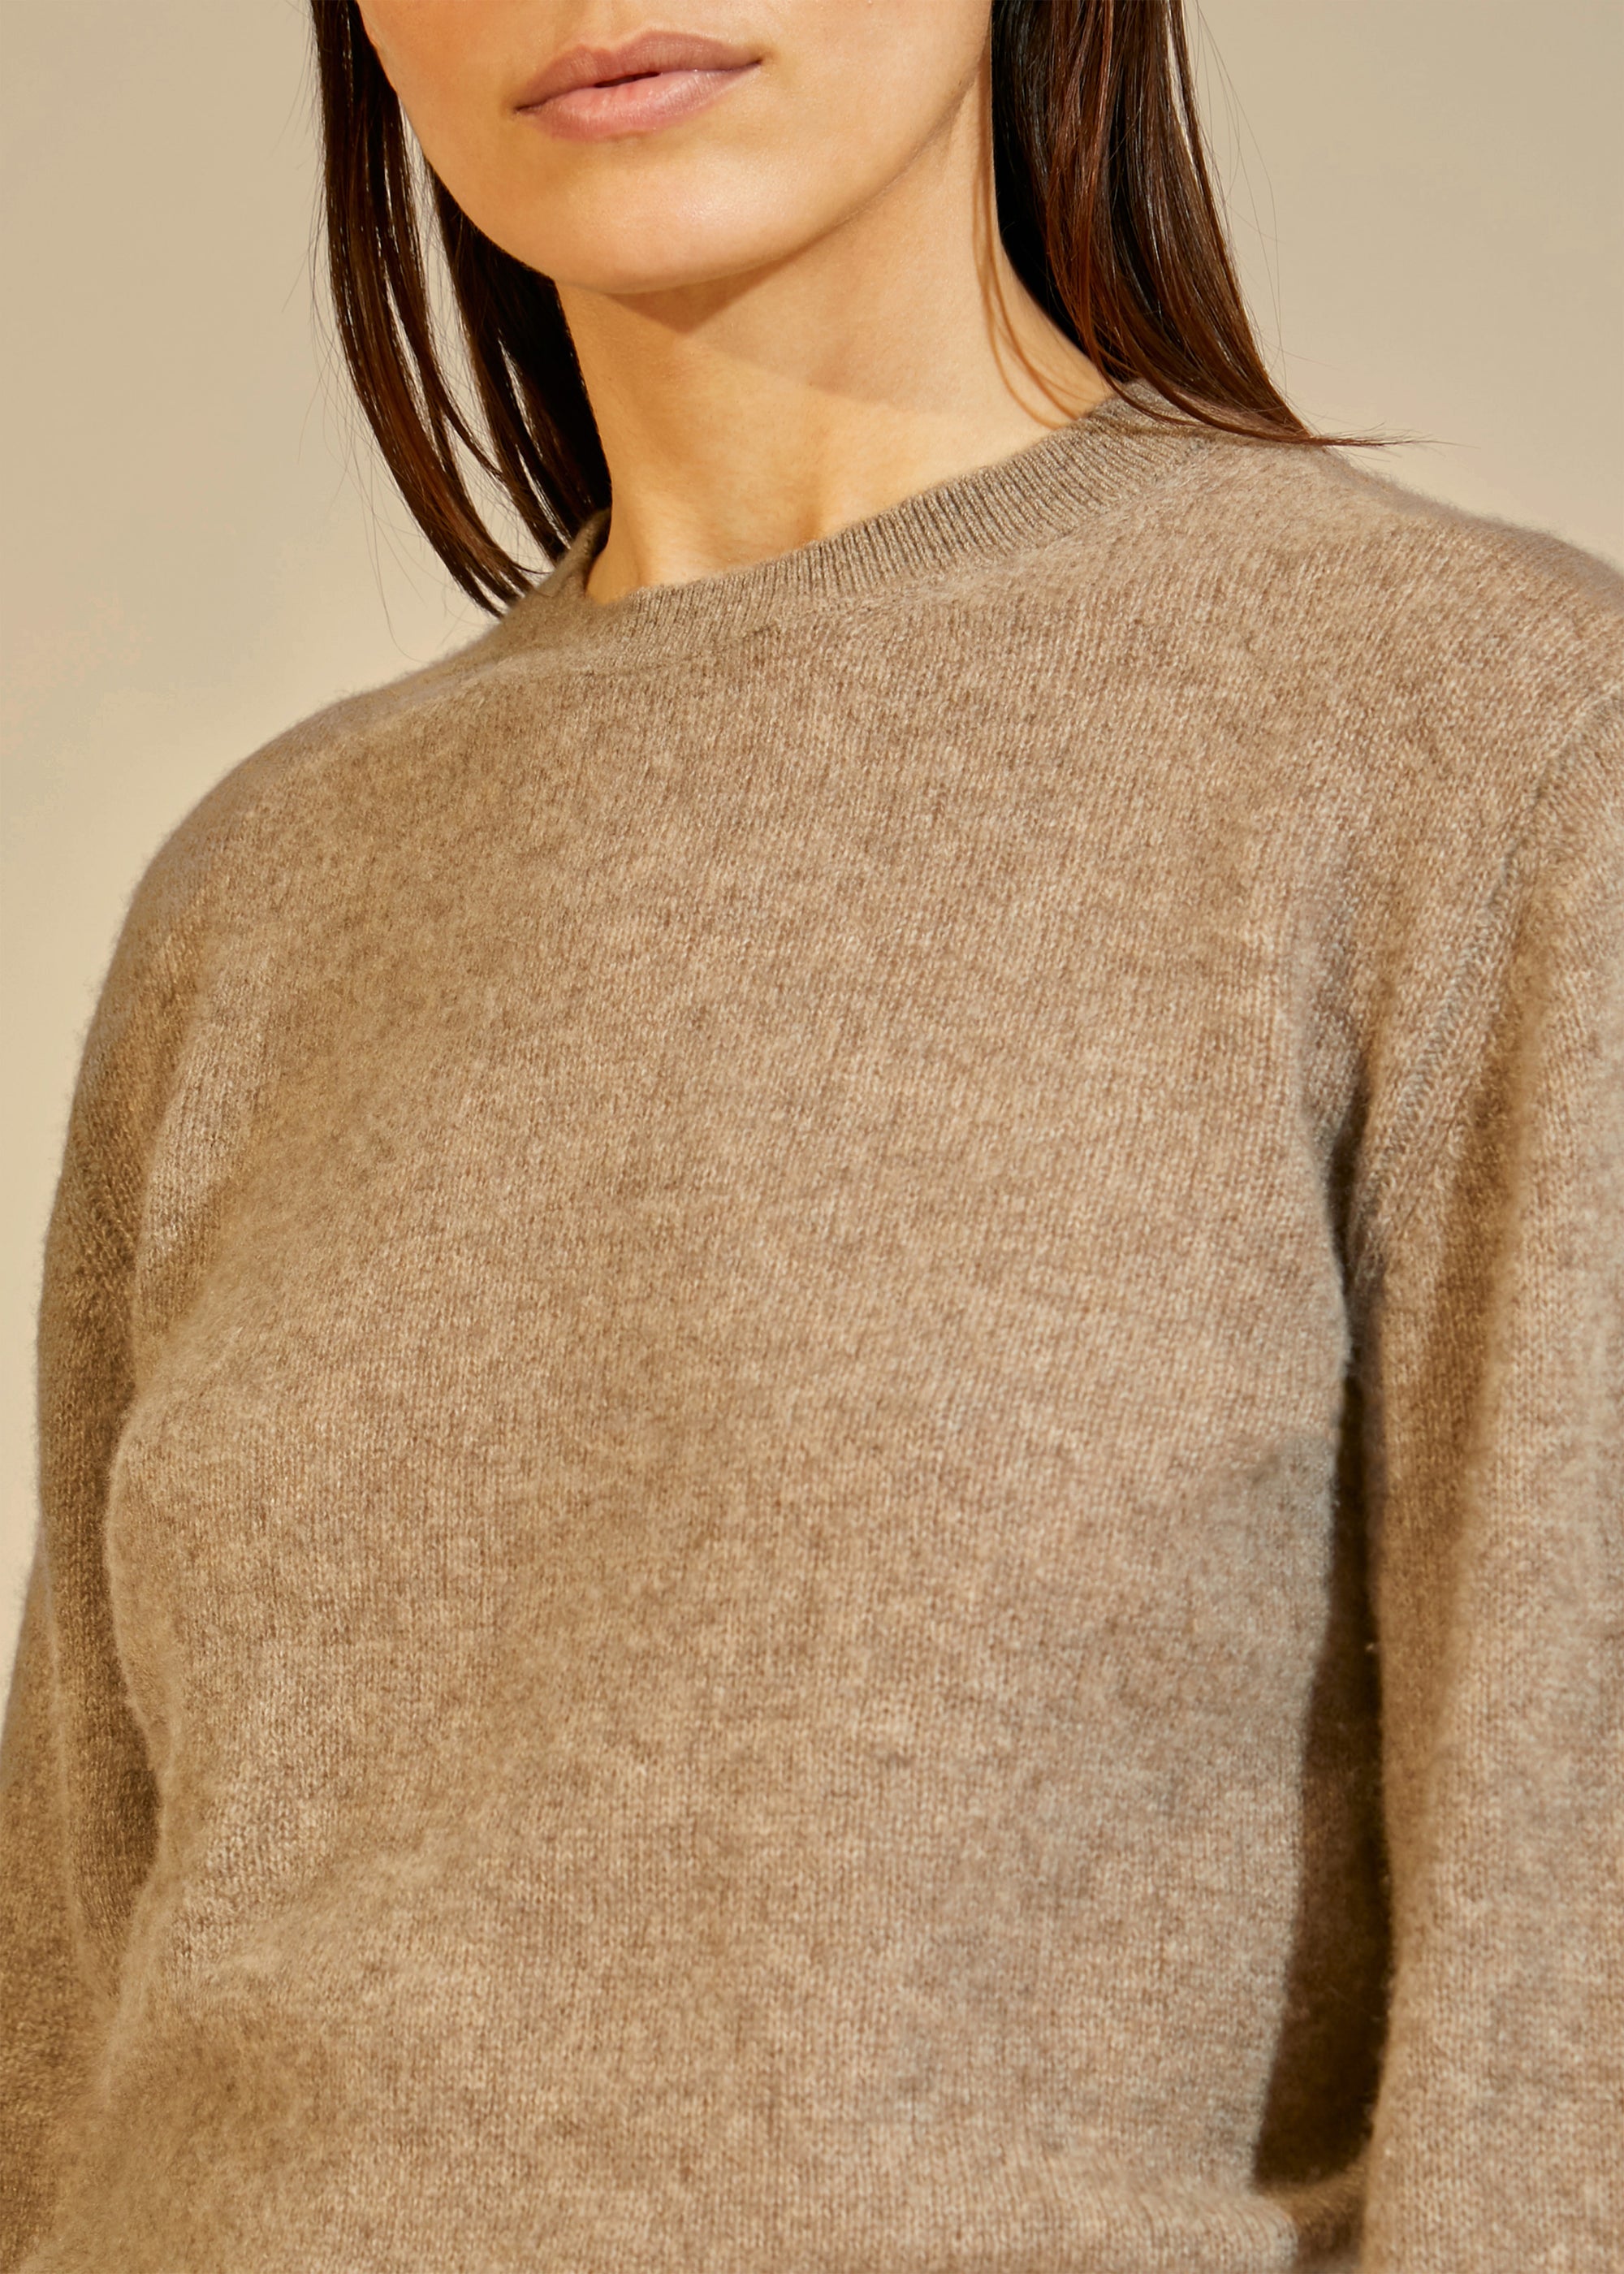 Viola sweater in cashmere - Barley